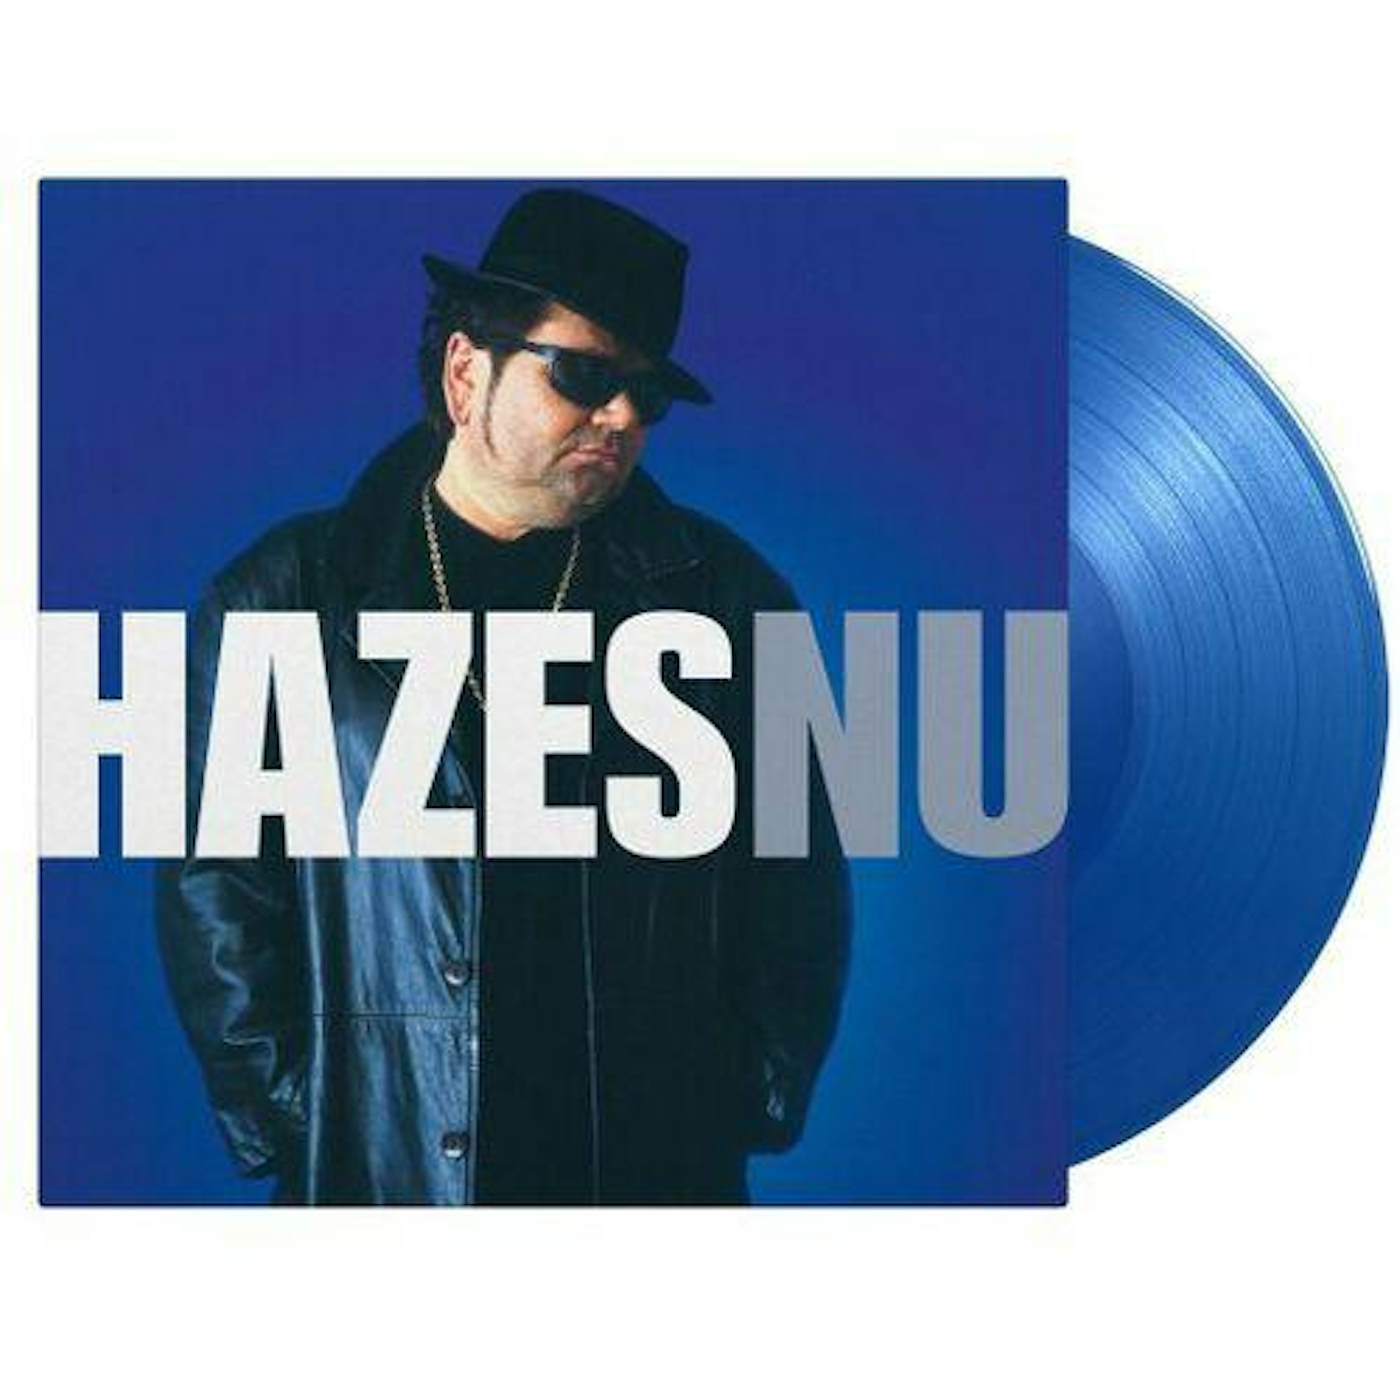 Andre Hazes NU (BLUE VINYL/180G) Vinyl Record